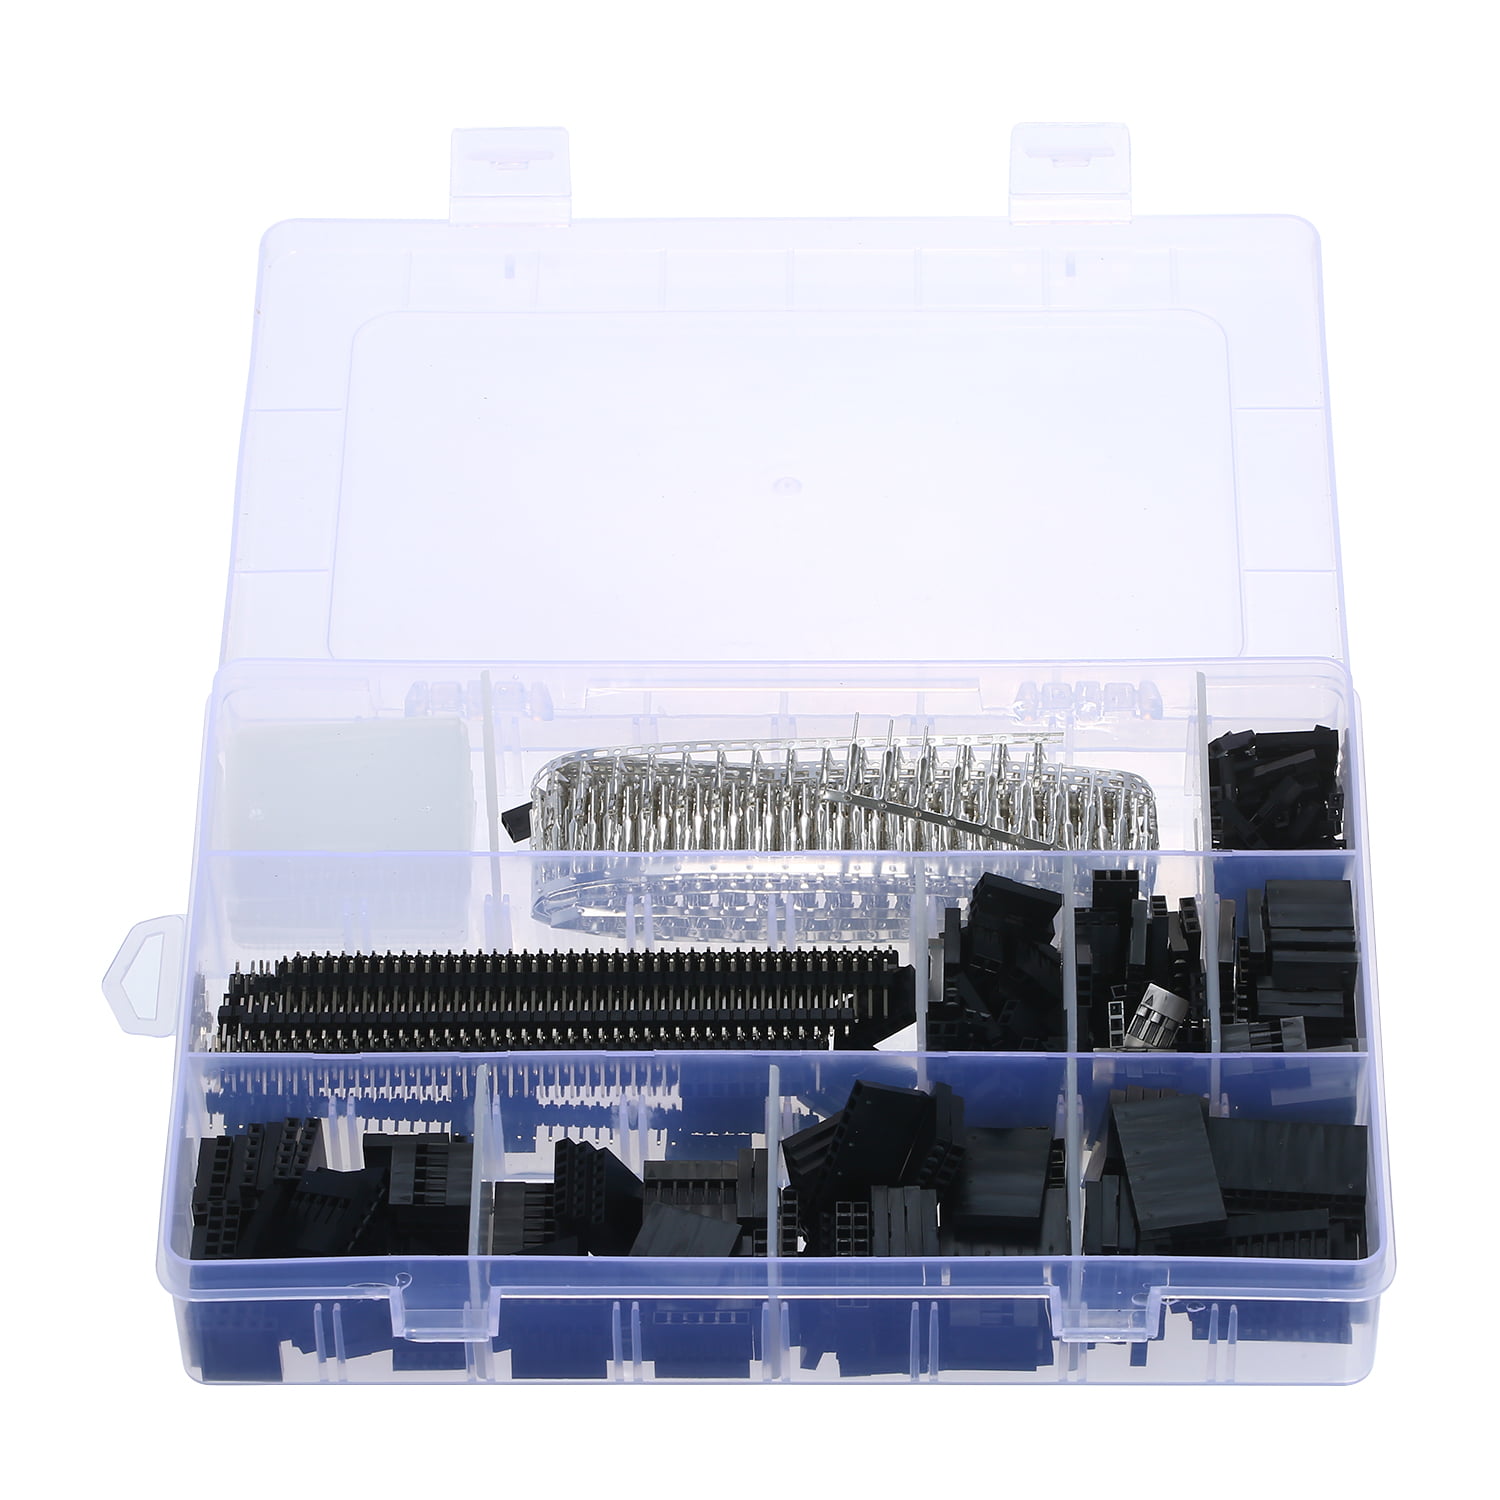 1450Pcs/Set Dupont Connector Kit Electronics Assorted Kit Parts Accessories 